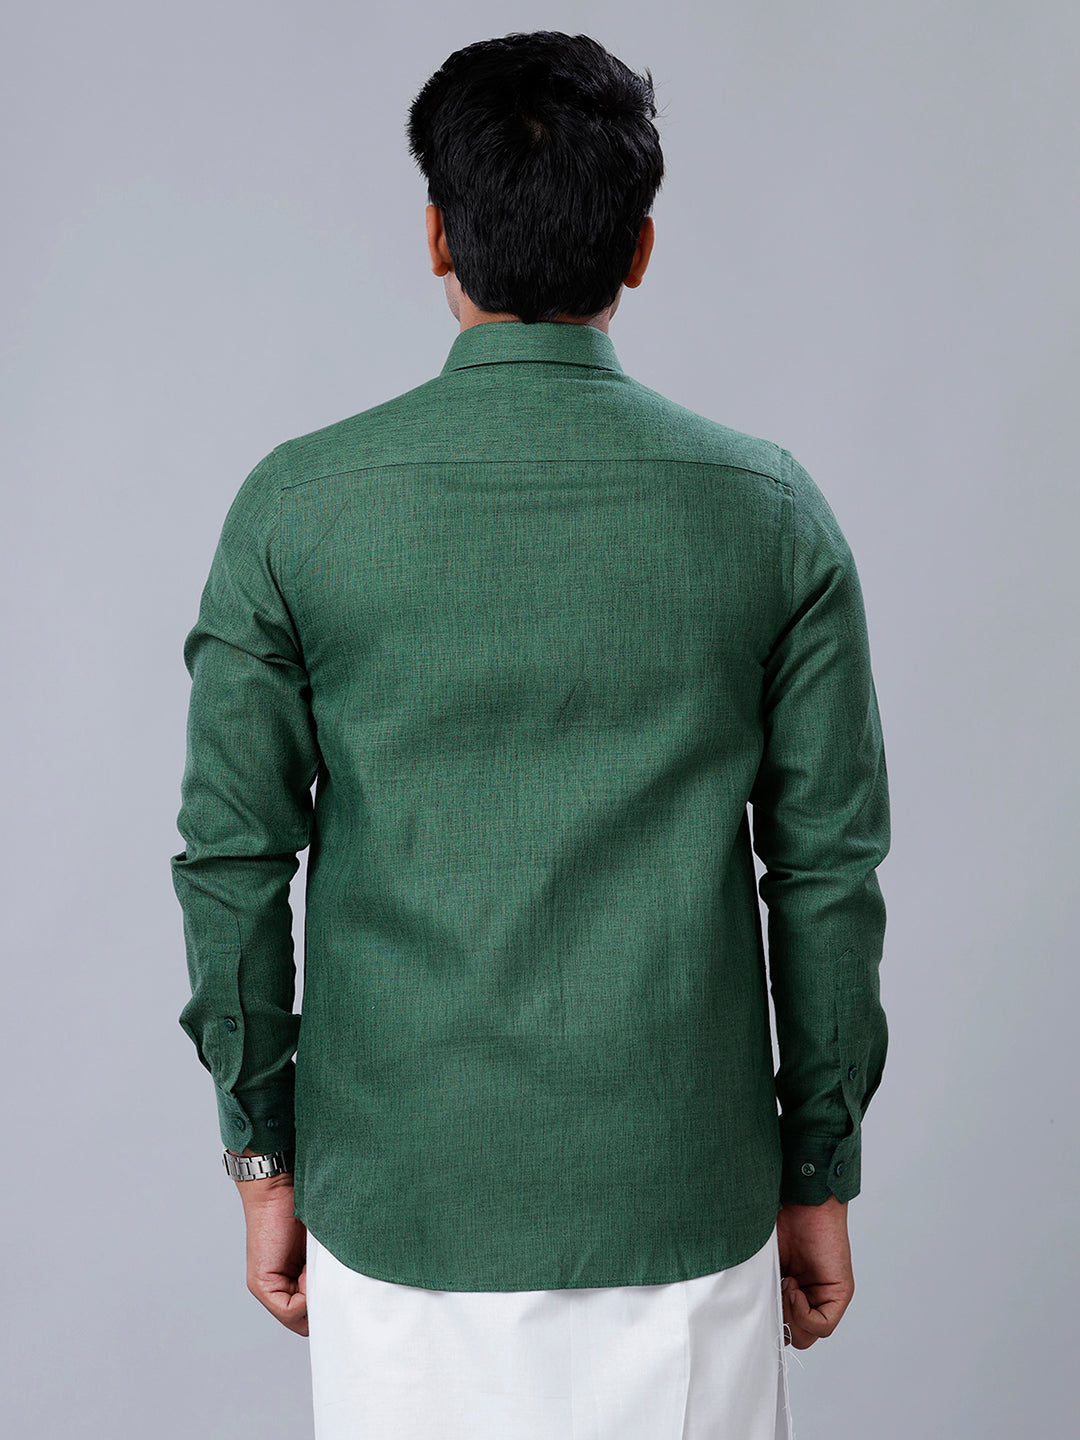 Mens Formal Shirt Full Sleeves Dark Green T26 TB9-Back view